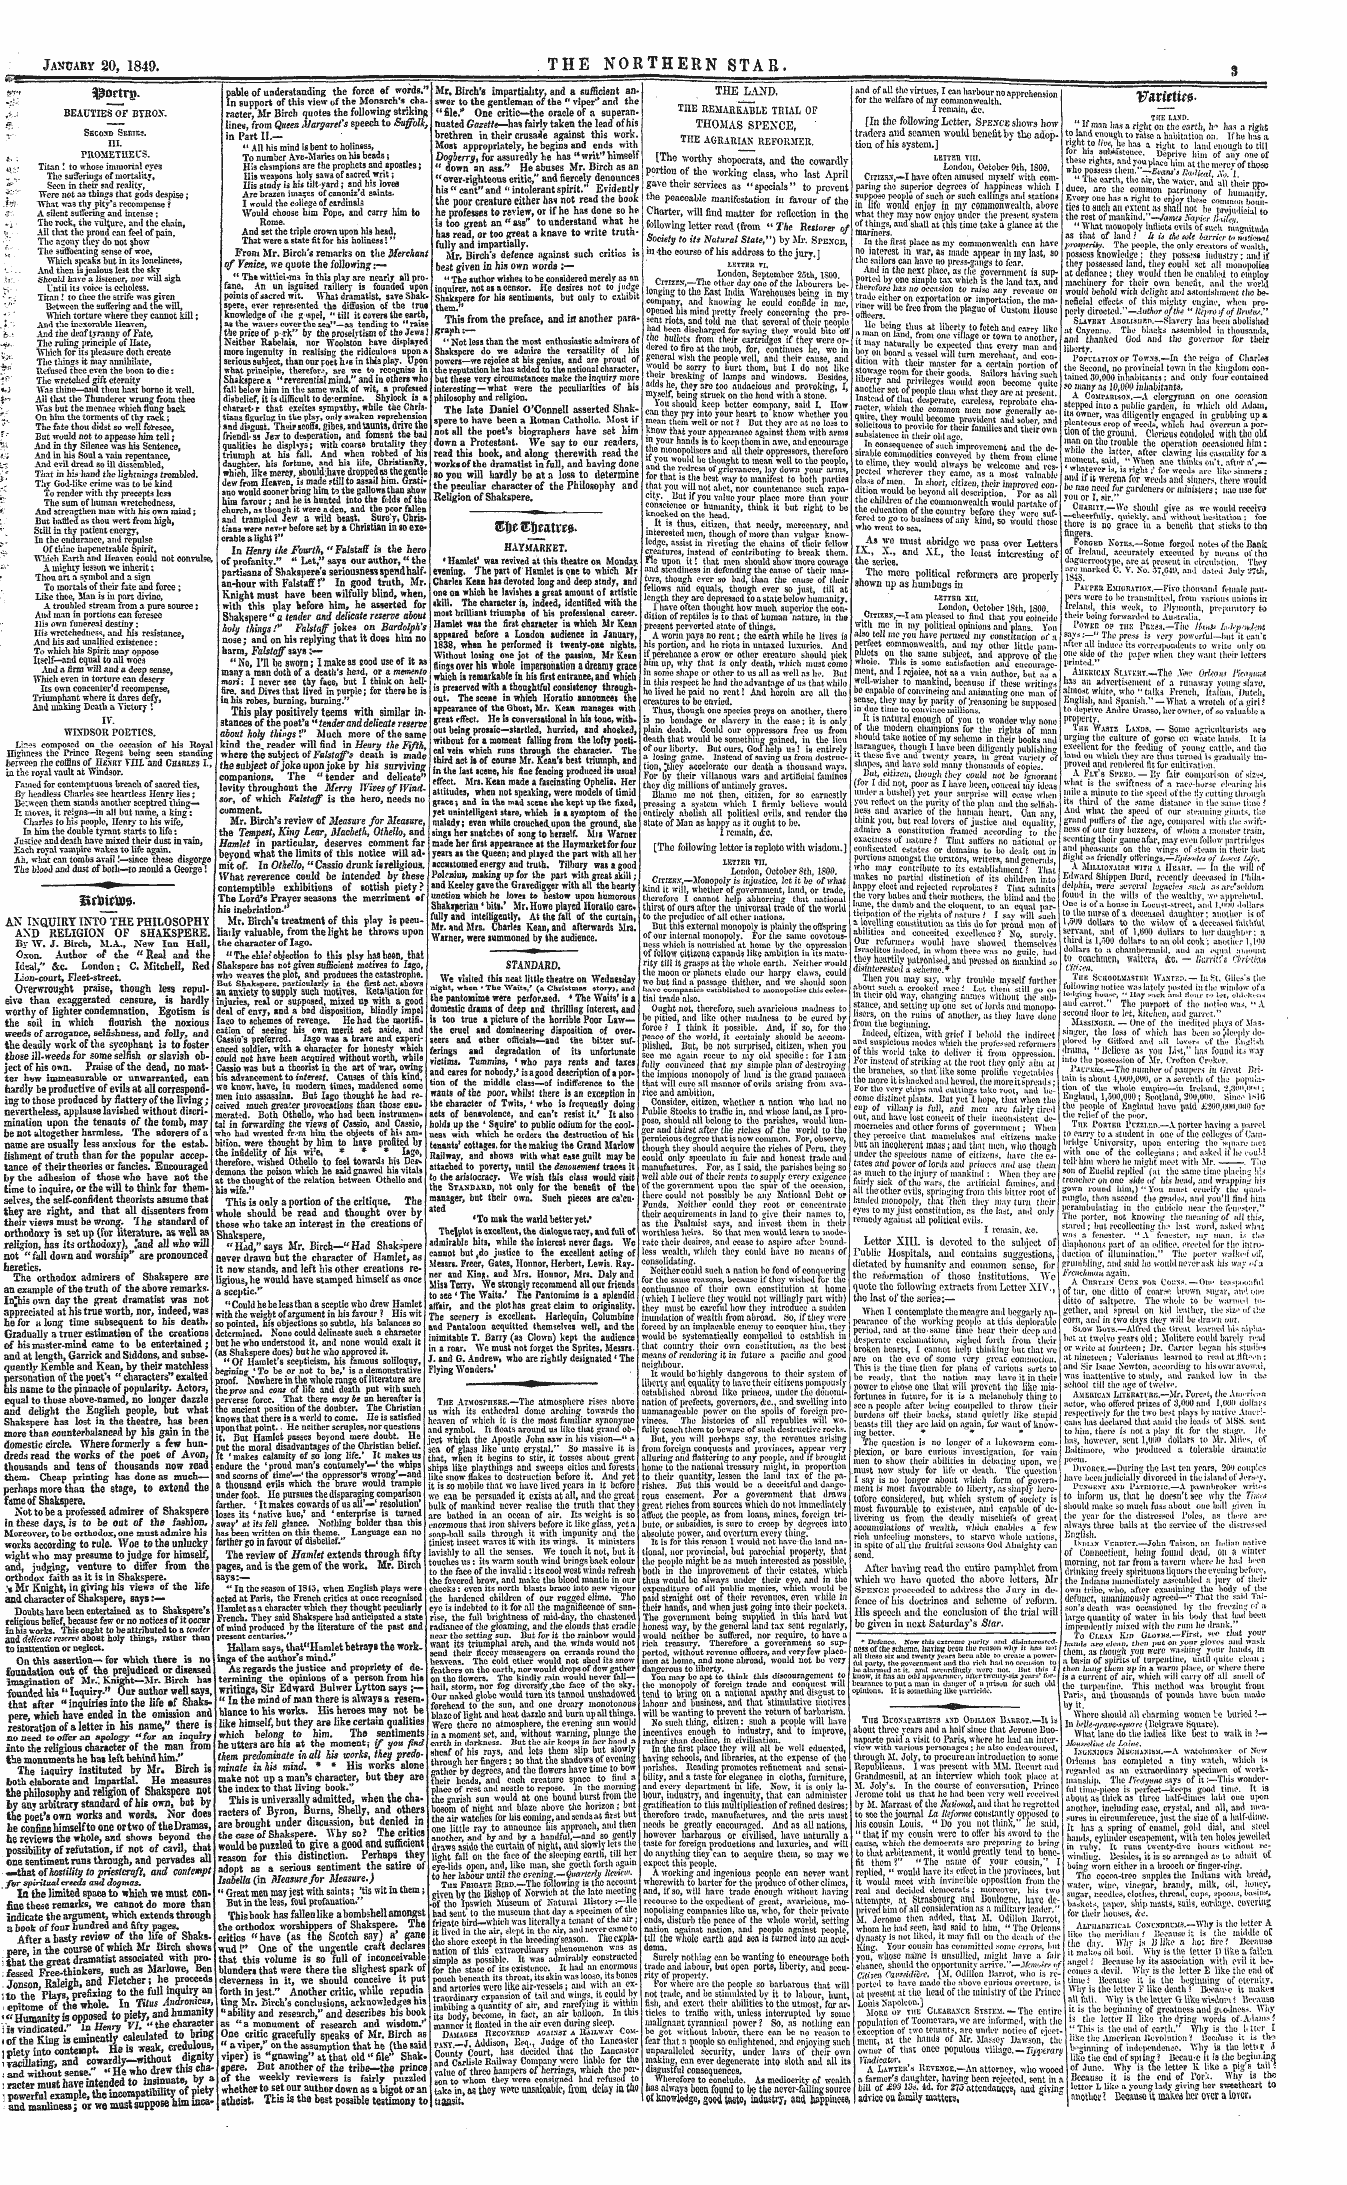 Northern Star (1837-1852): jS F Y, 2nd edition - Vavittu*